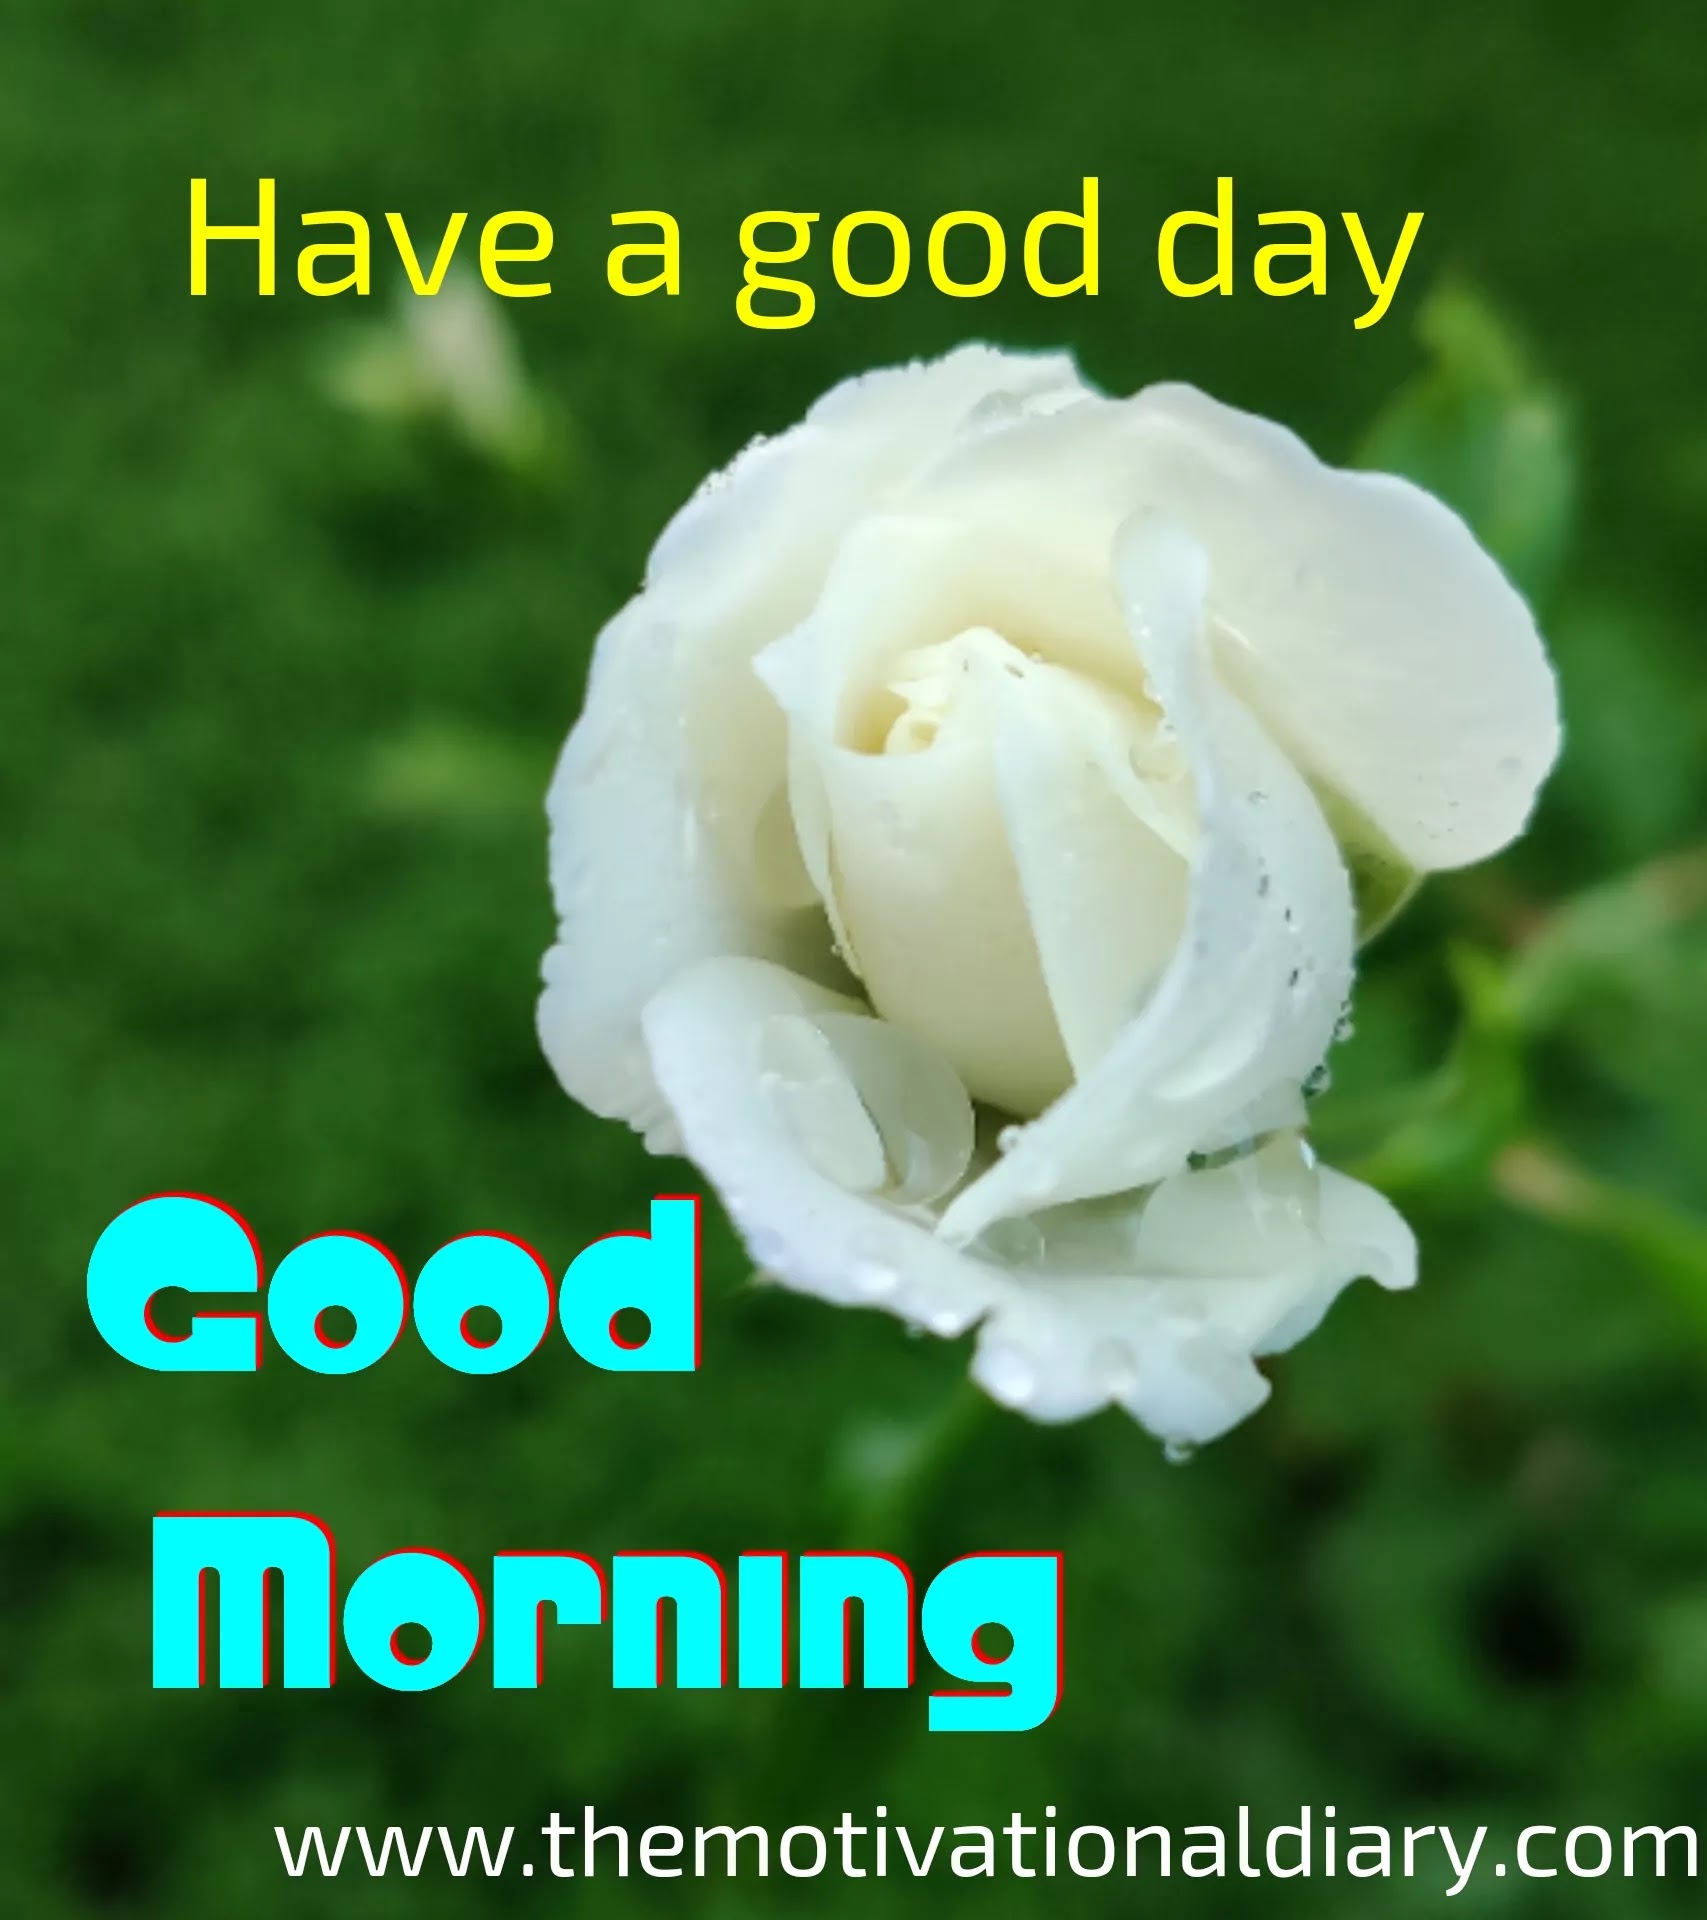 good-morning-image-quotes-the-motivational-diary-ram-maurya